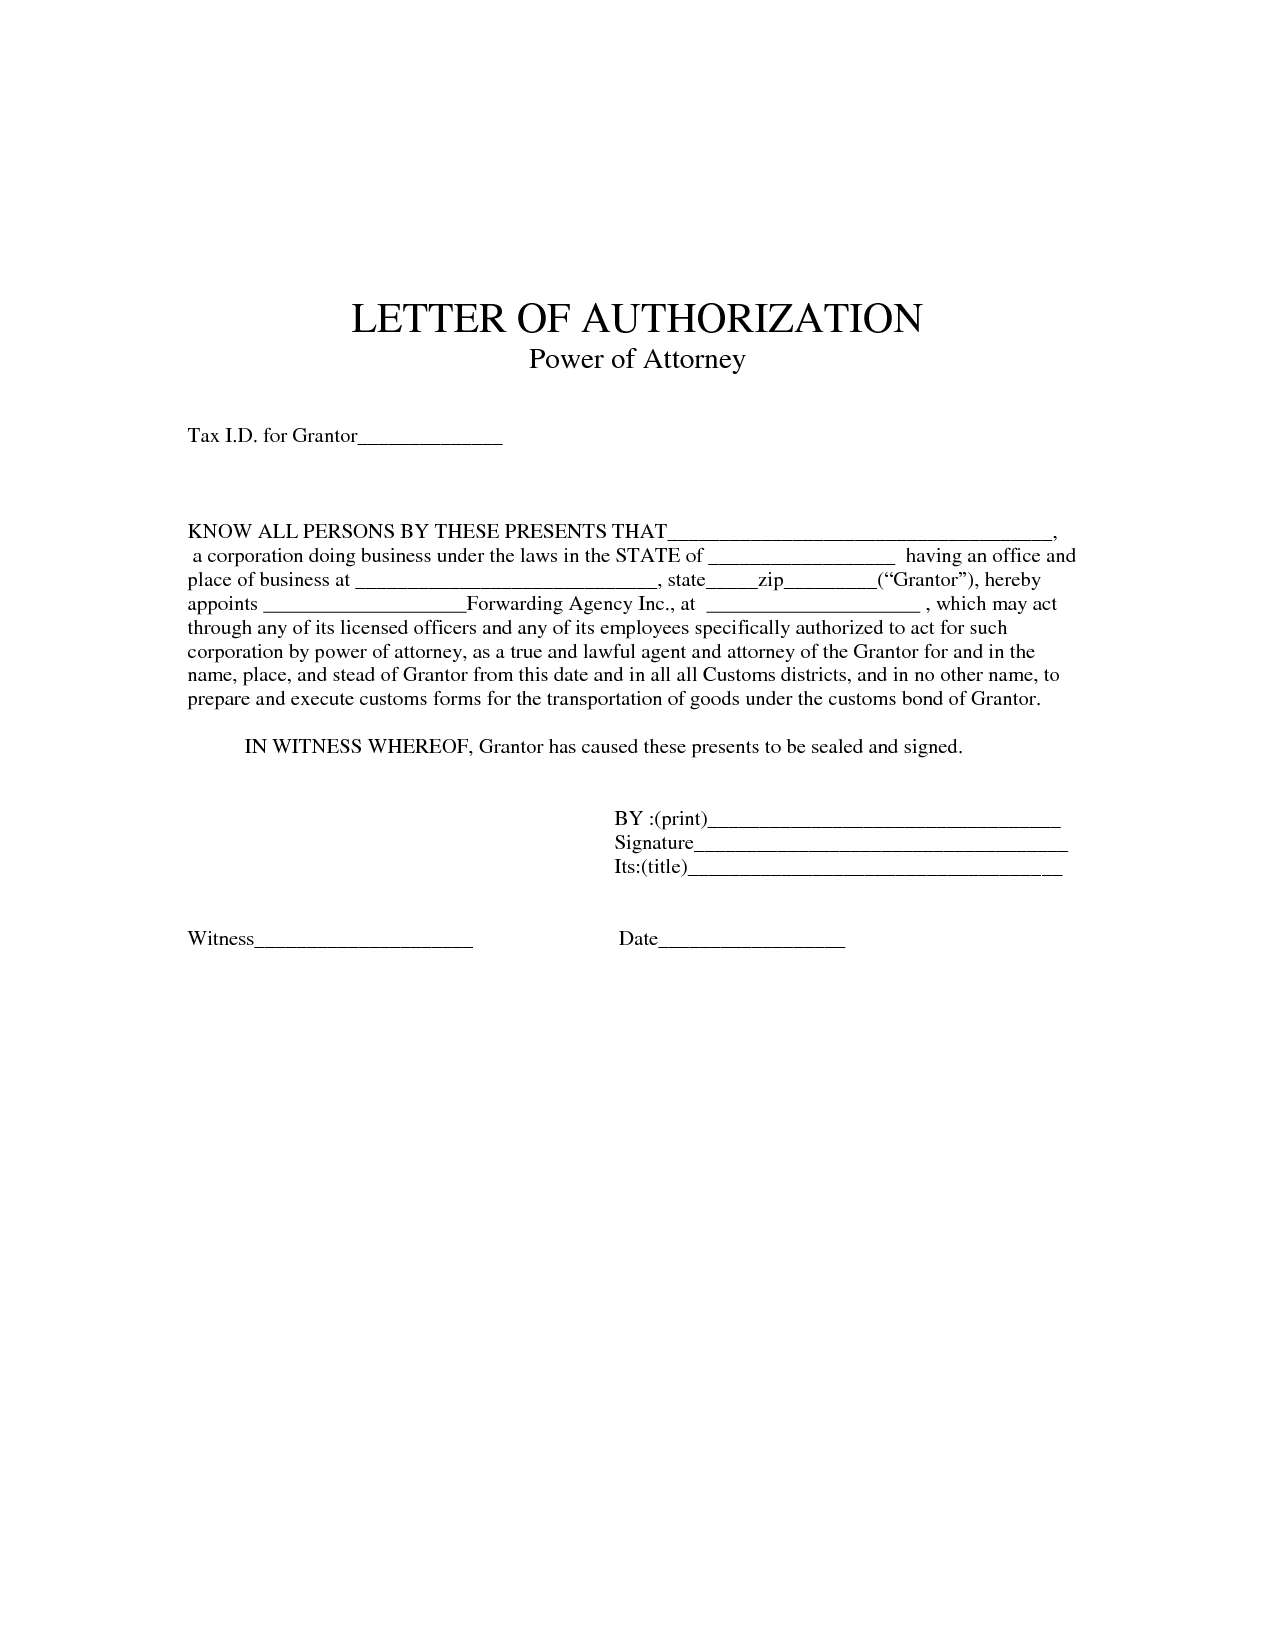 Power of Authorization Letter Free Sample | Authorization ...